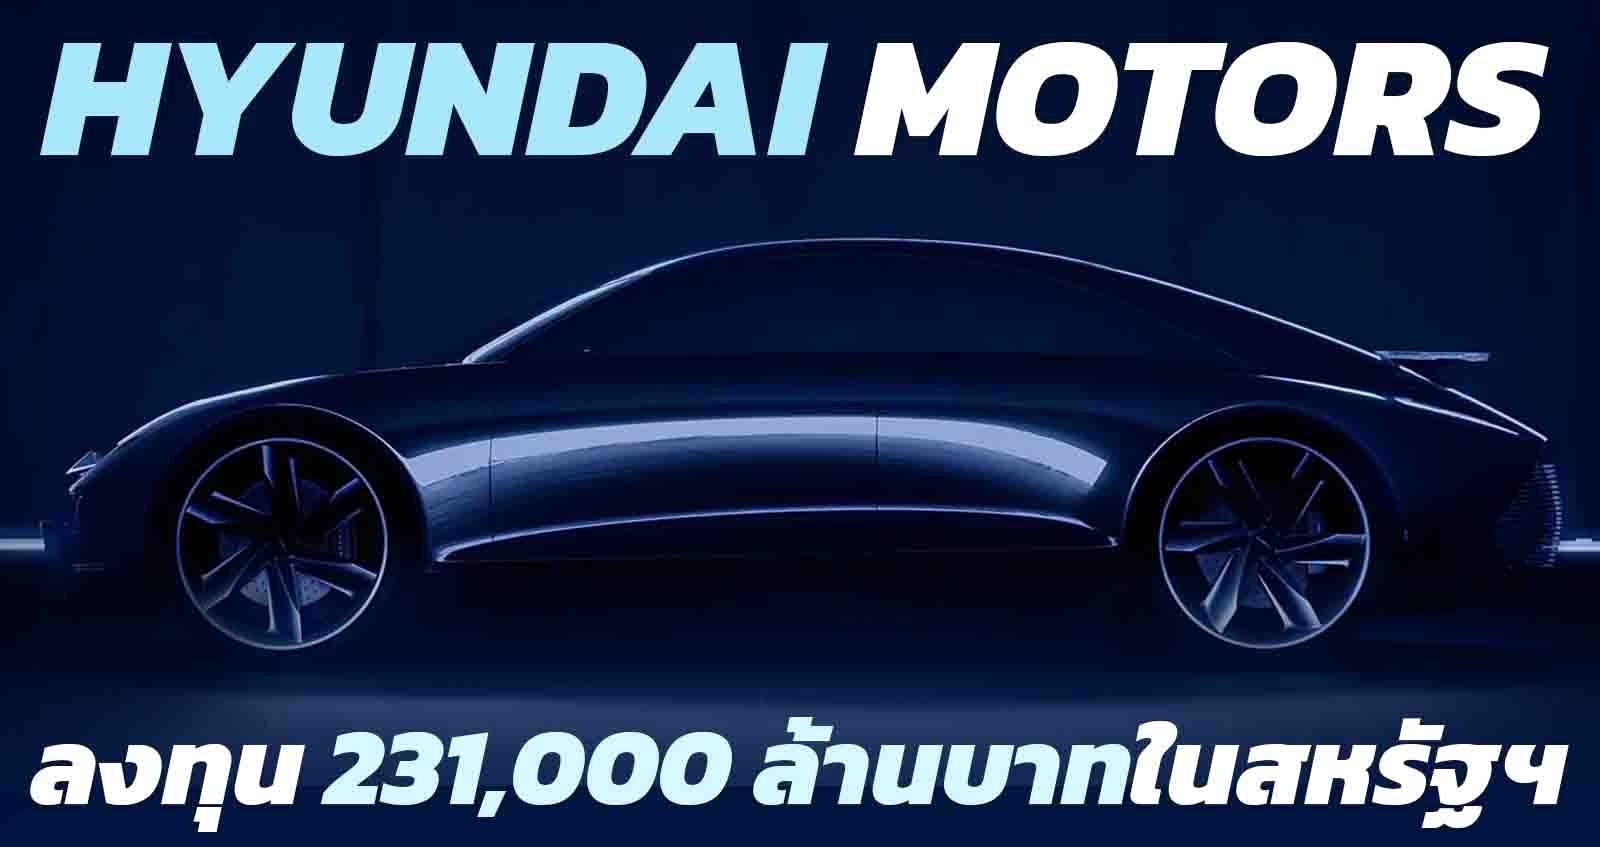 Hyundai Motors ลงทุนกว่า 231,000 ล้านบาทในสหรัฐฯ ดันสู่ผู้นำยนตกรรมไฟฟ้า